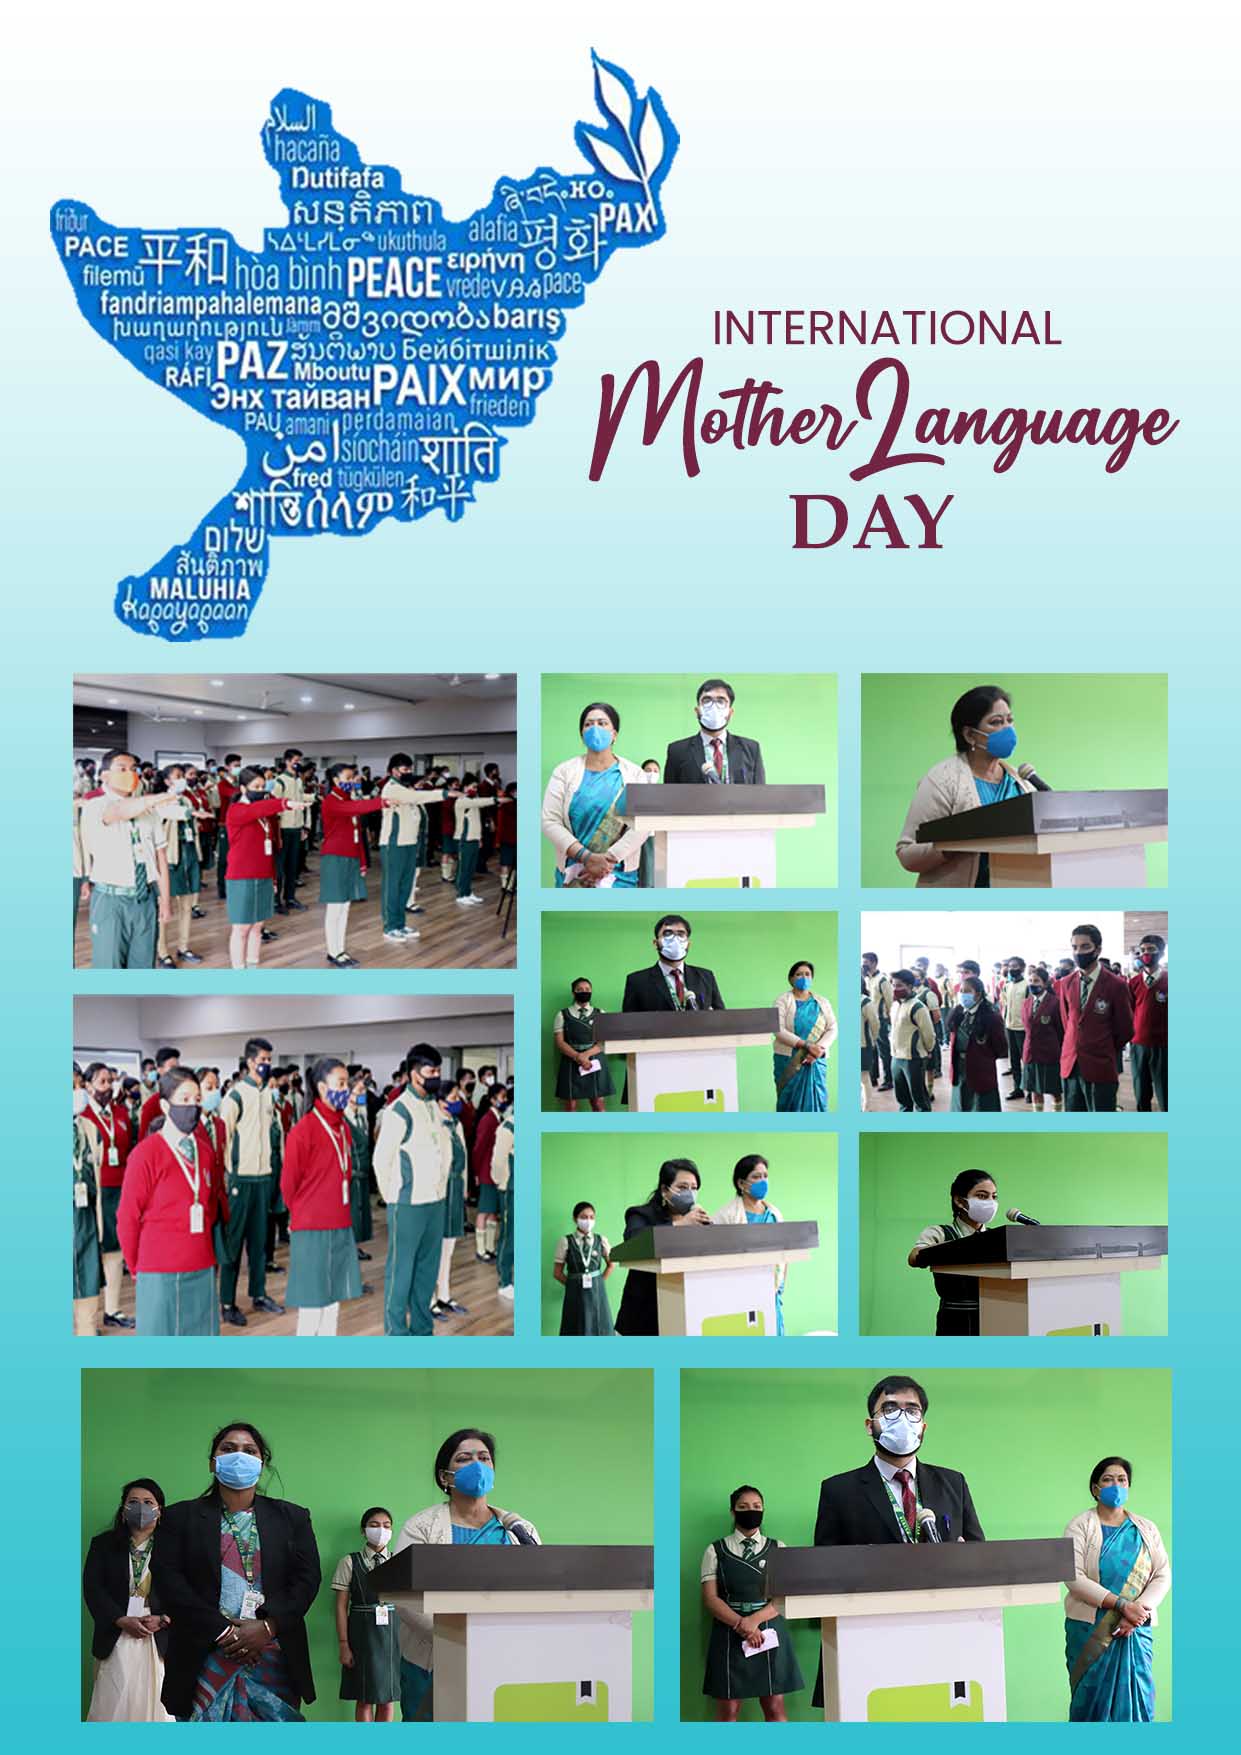 International Mother Language Day # 2020-21